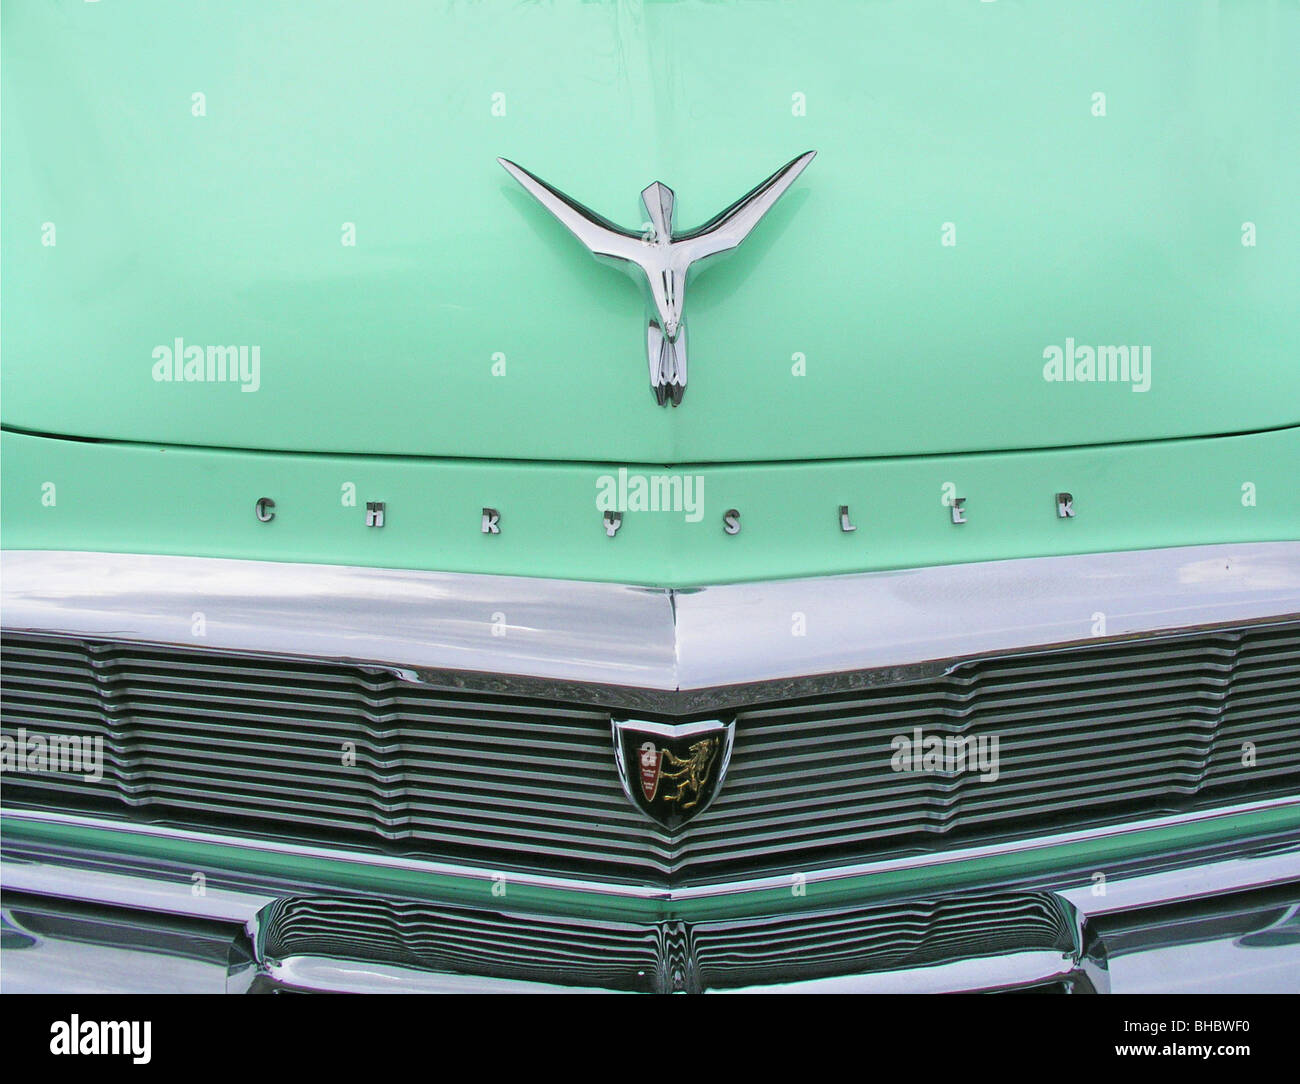 https://c8.alamy.com/comp/BHBWF0/chrysler-auto-car-mint-green-ornament-grille-wings-hood-bumper-chrome-BHBWF0.jpg